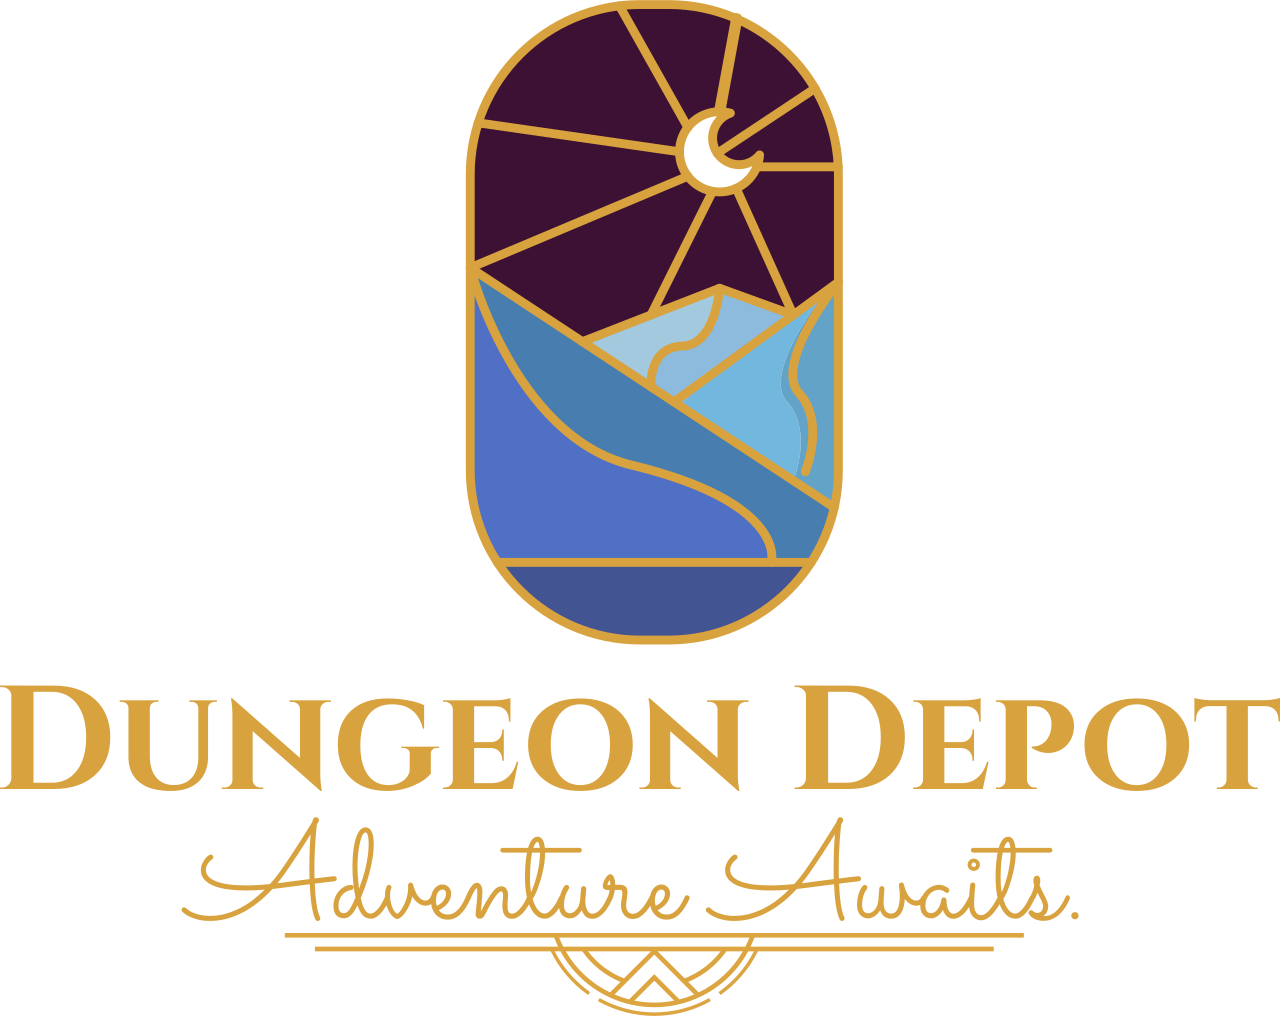 Dungeon Depot's logo